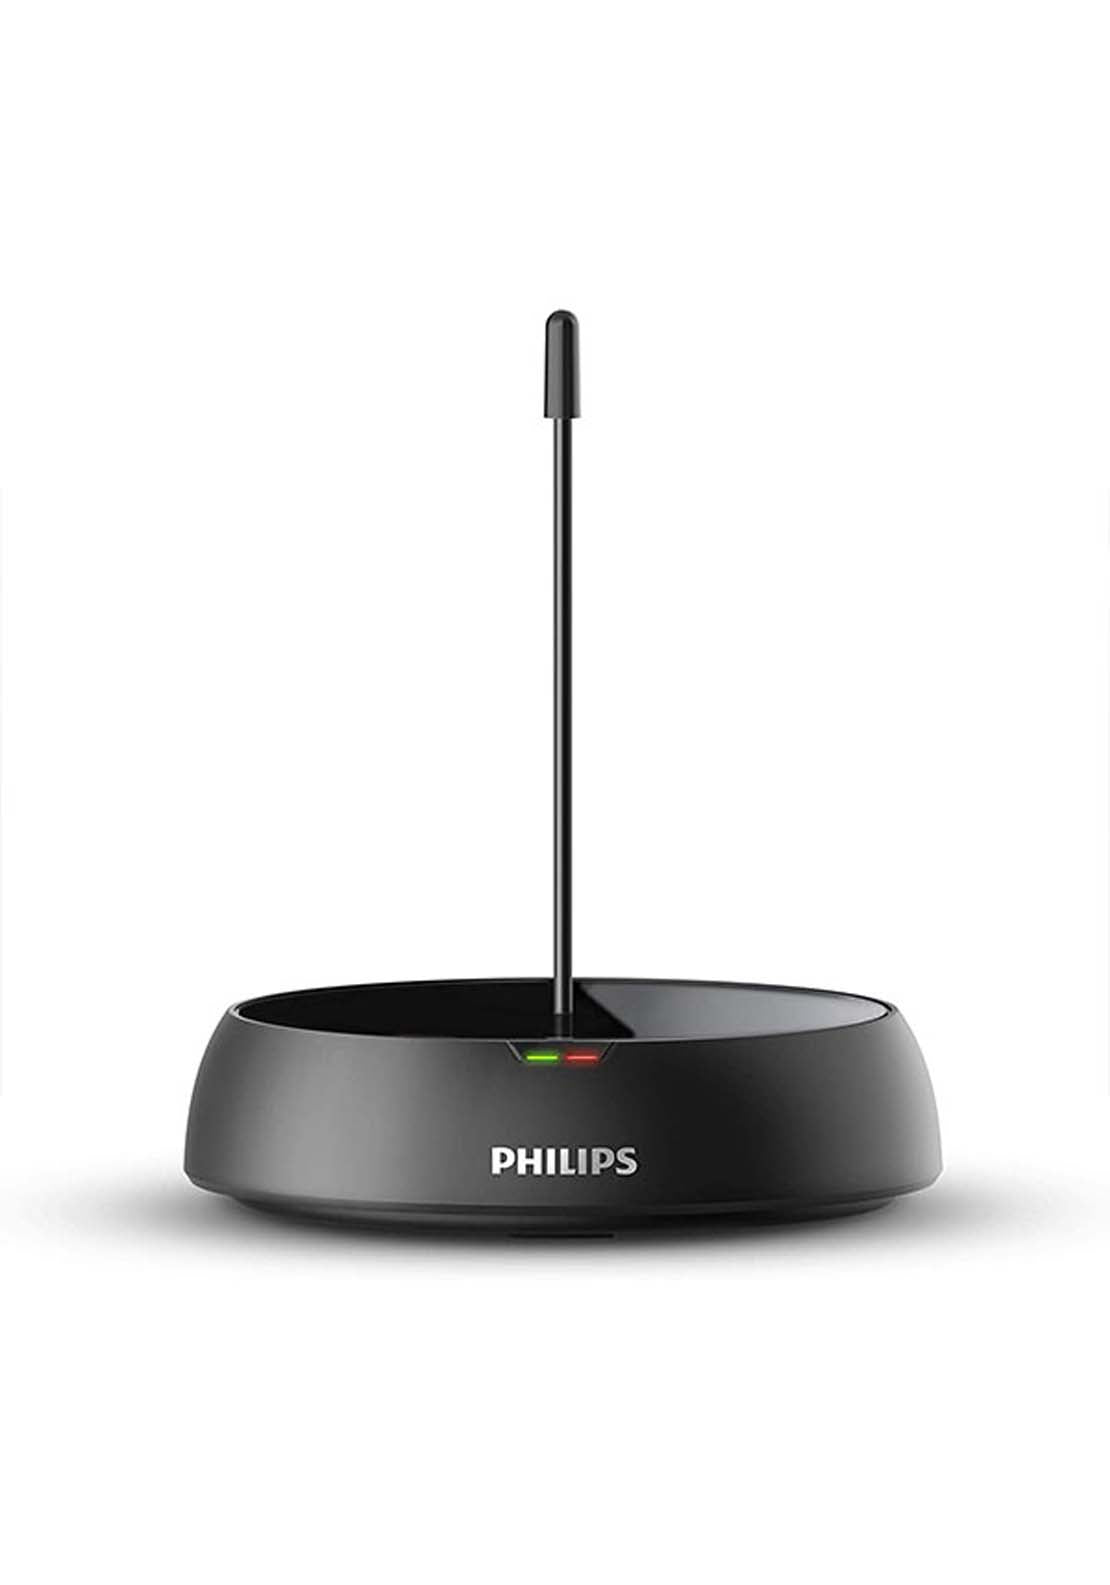 Philips Wireless Headphone | Shc520005 1 Shaws Department Stores